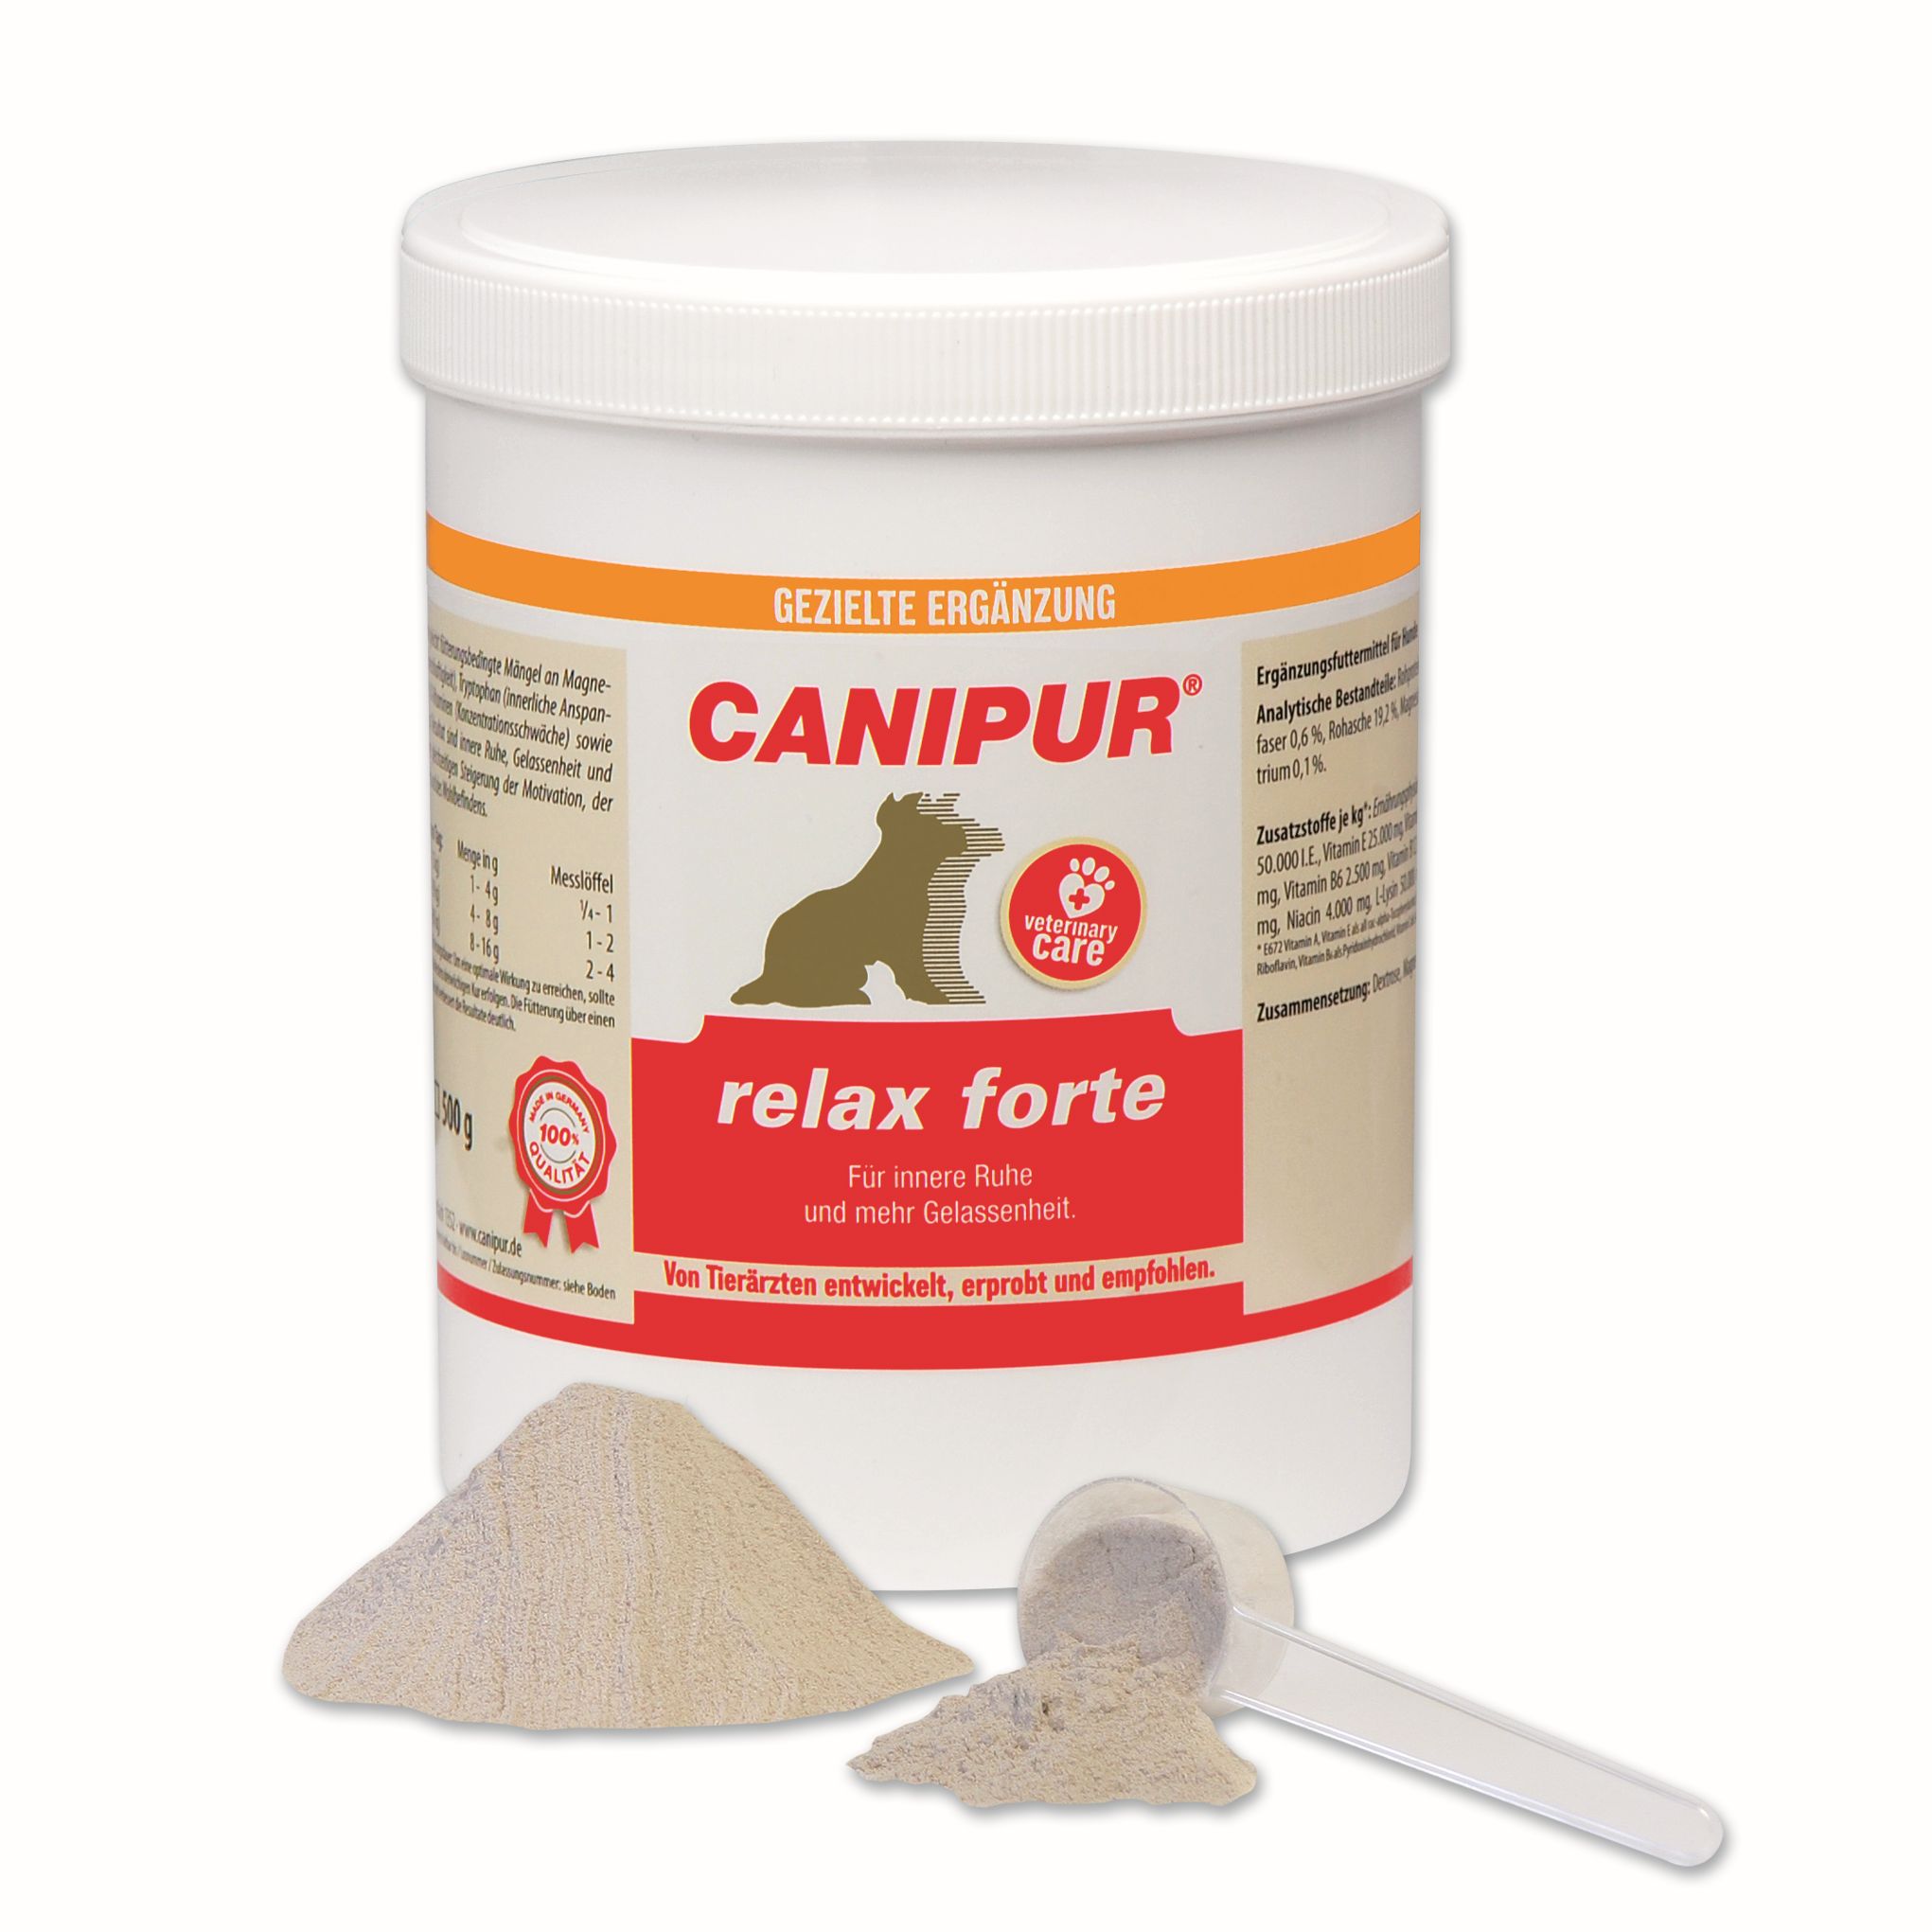 Canipur relax forte Beruhigungsmittel für Hunde von Vetripharm